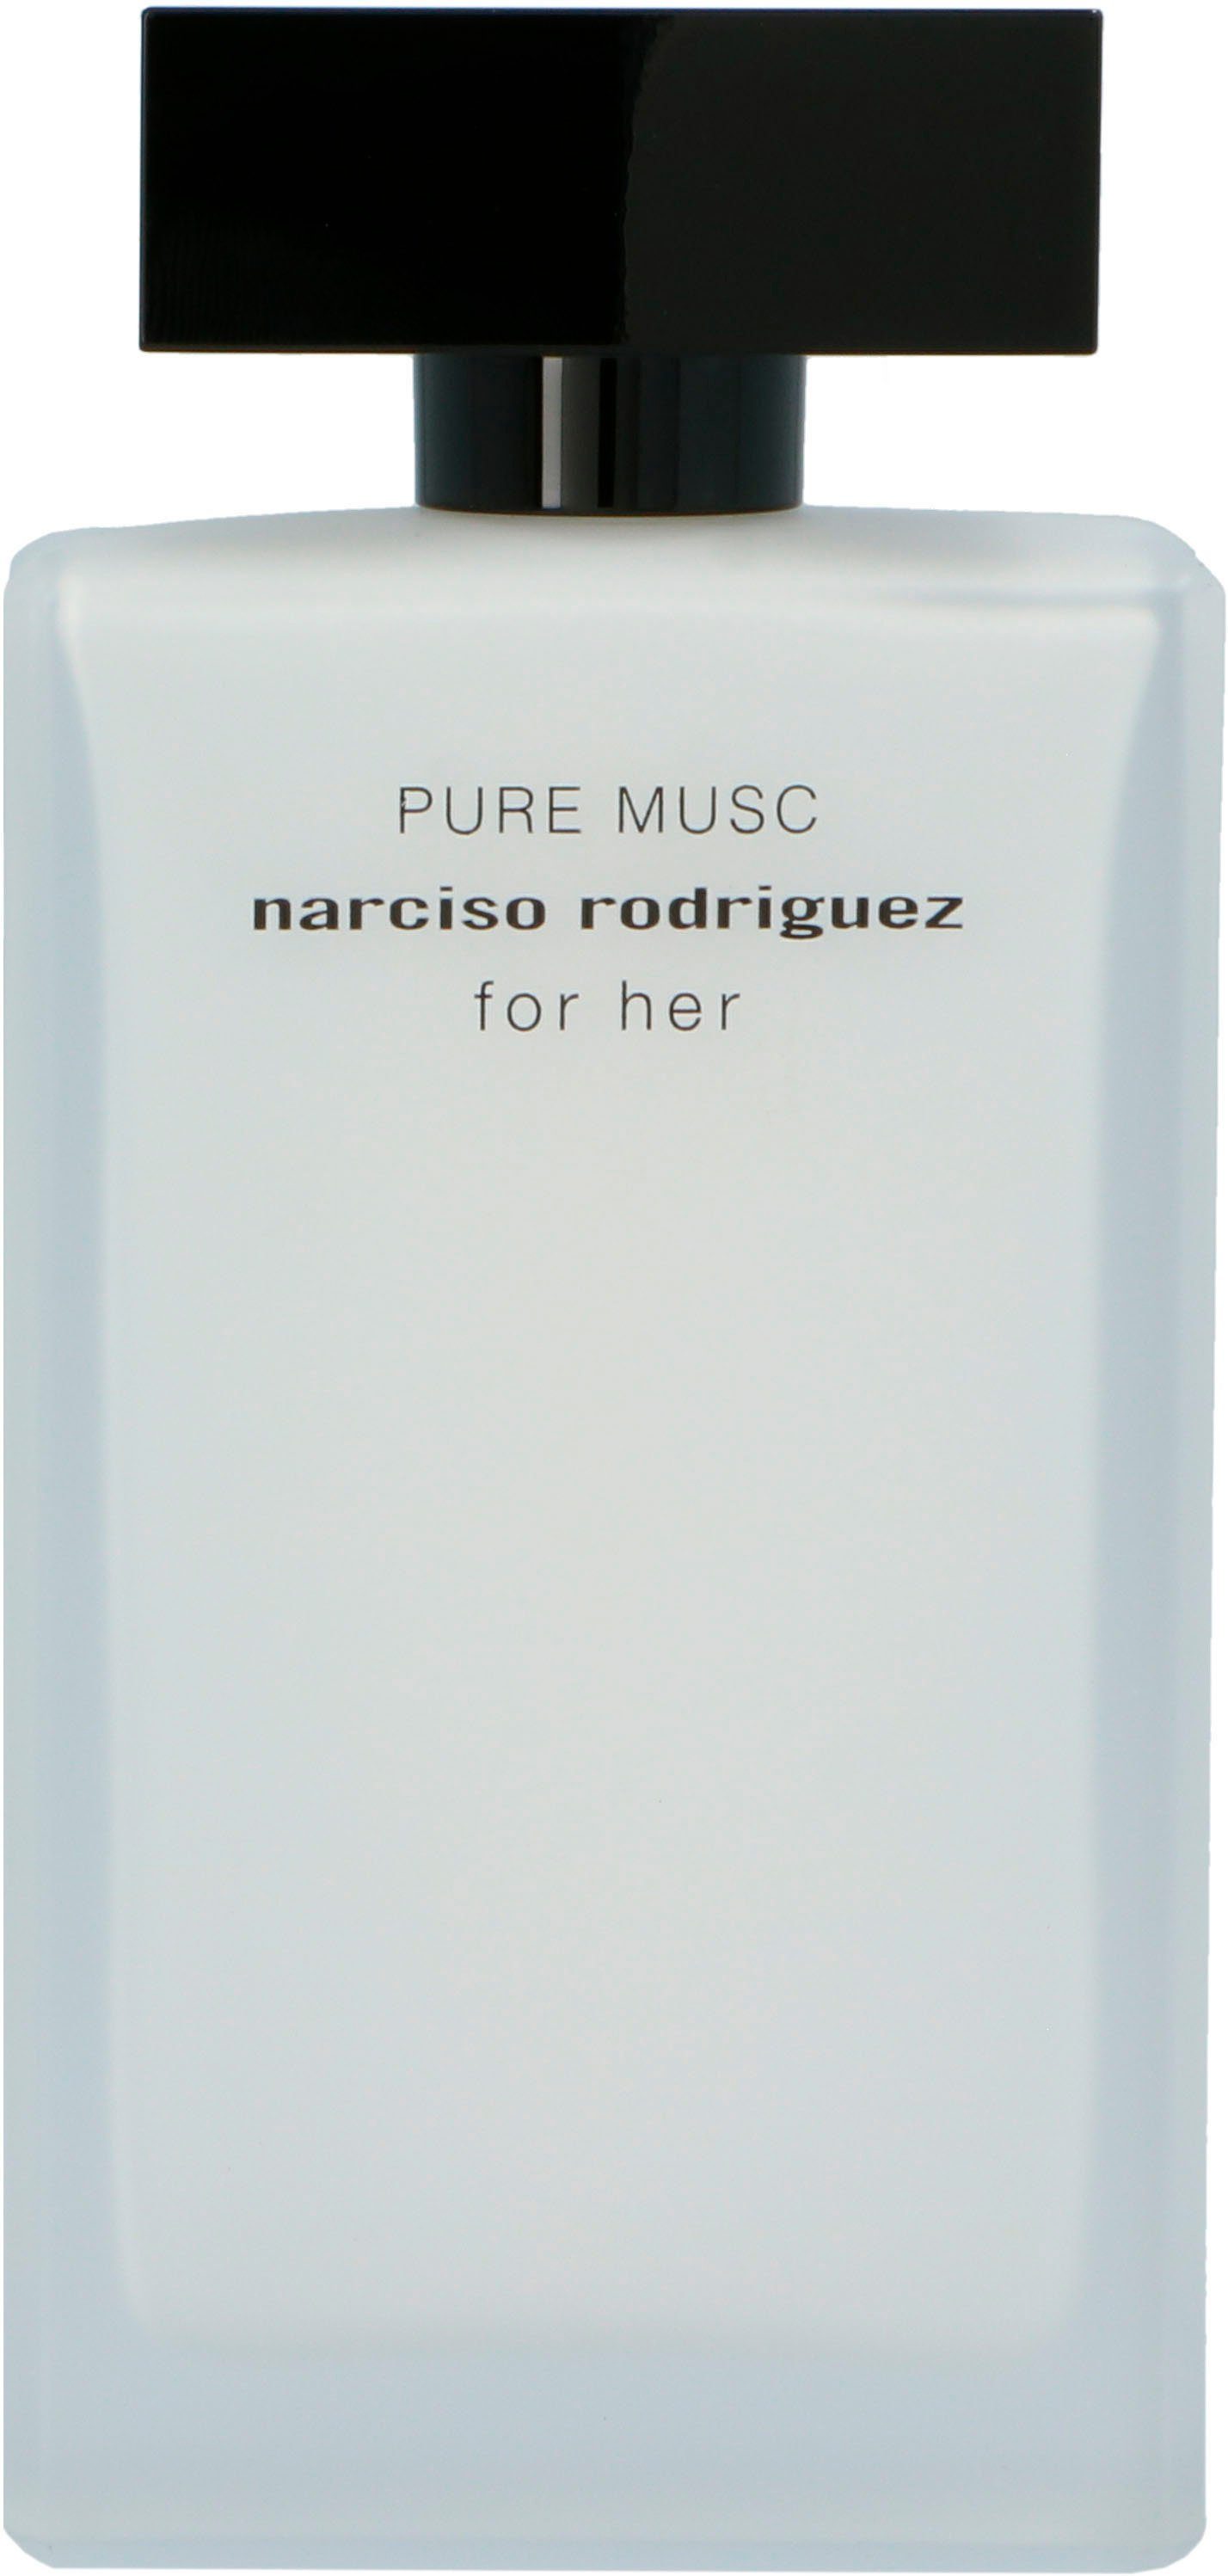 Eau rodriguez Pure for Rodriguez Musc narciso Narciso Her Parfum de